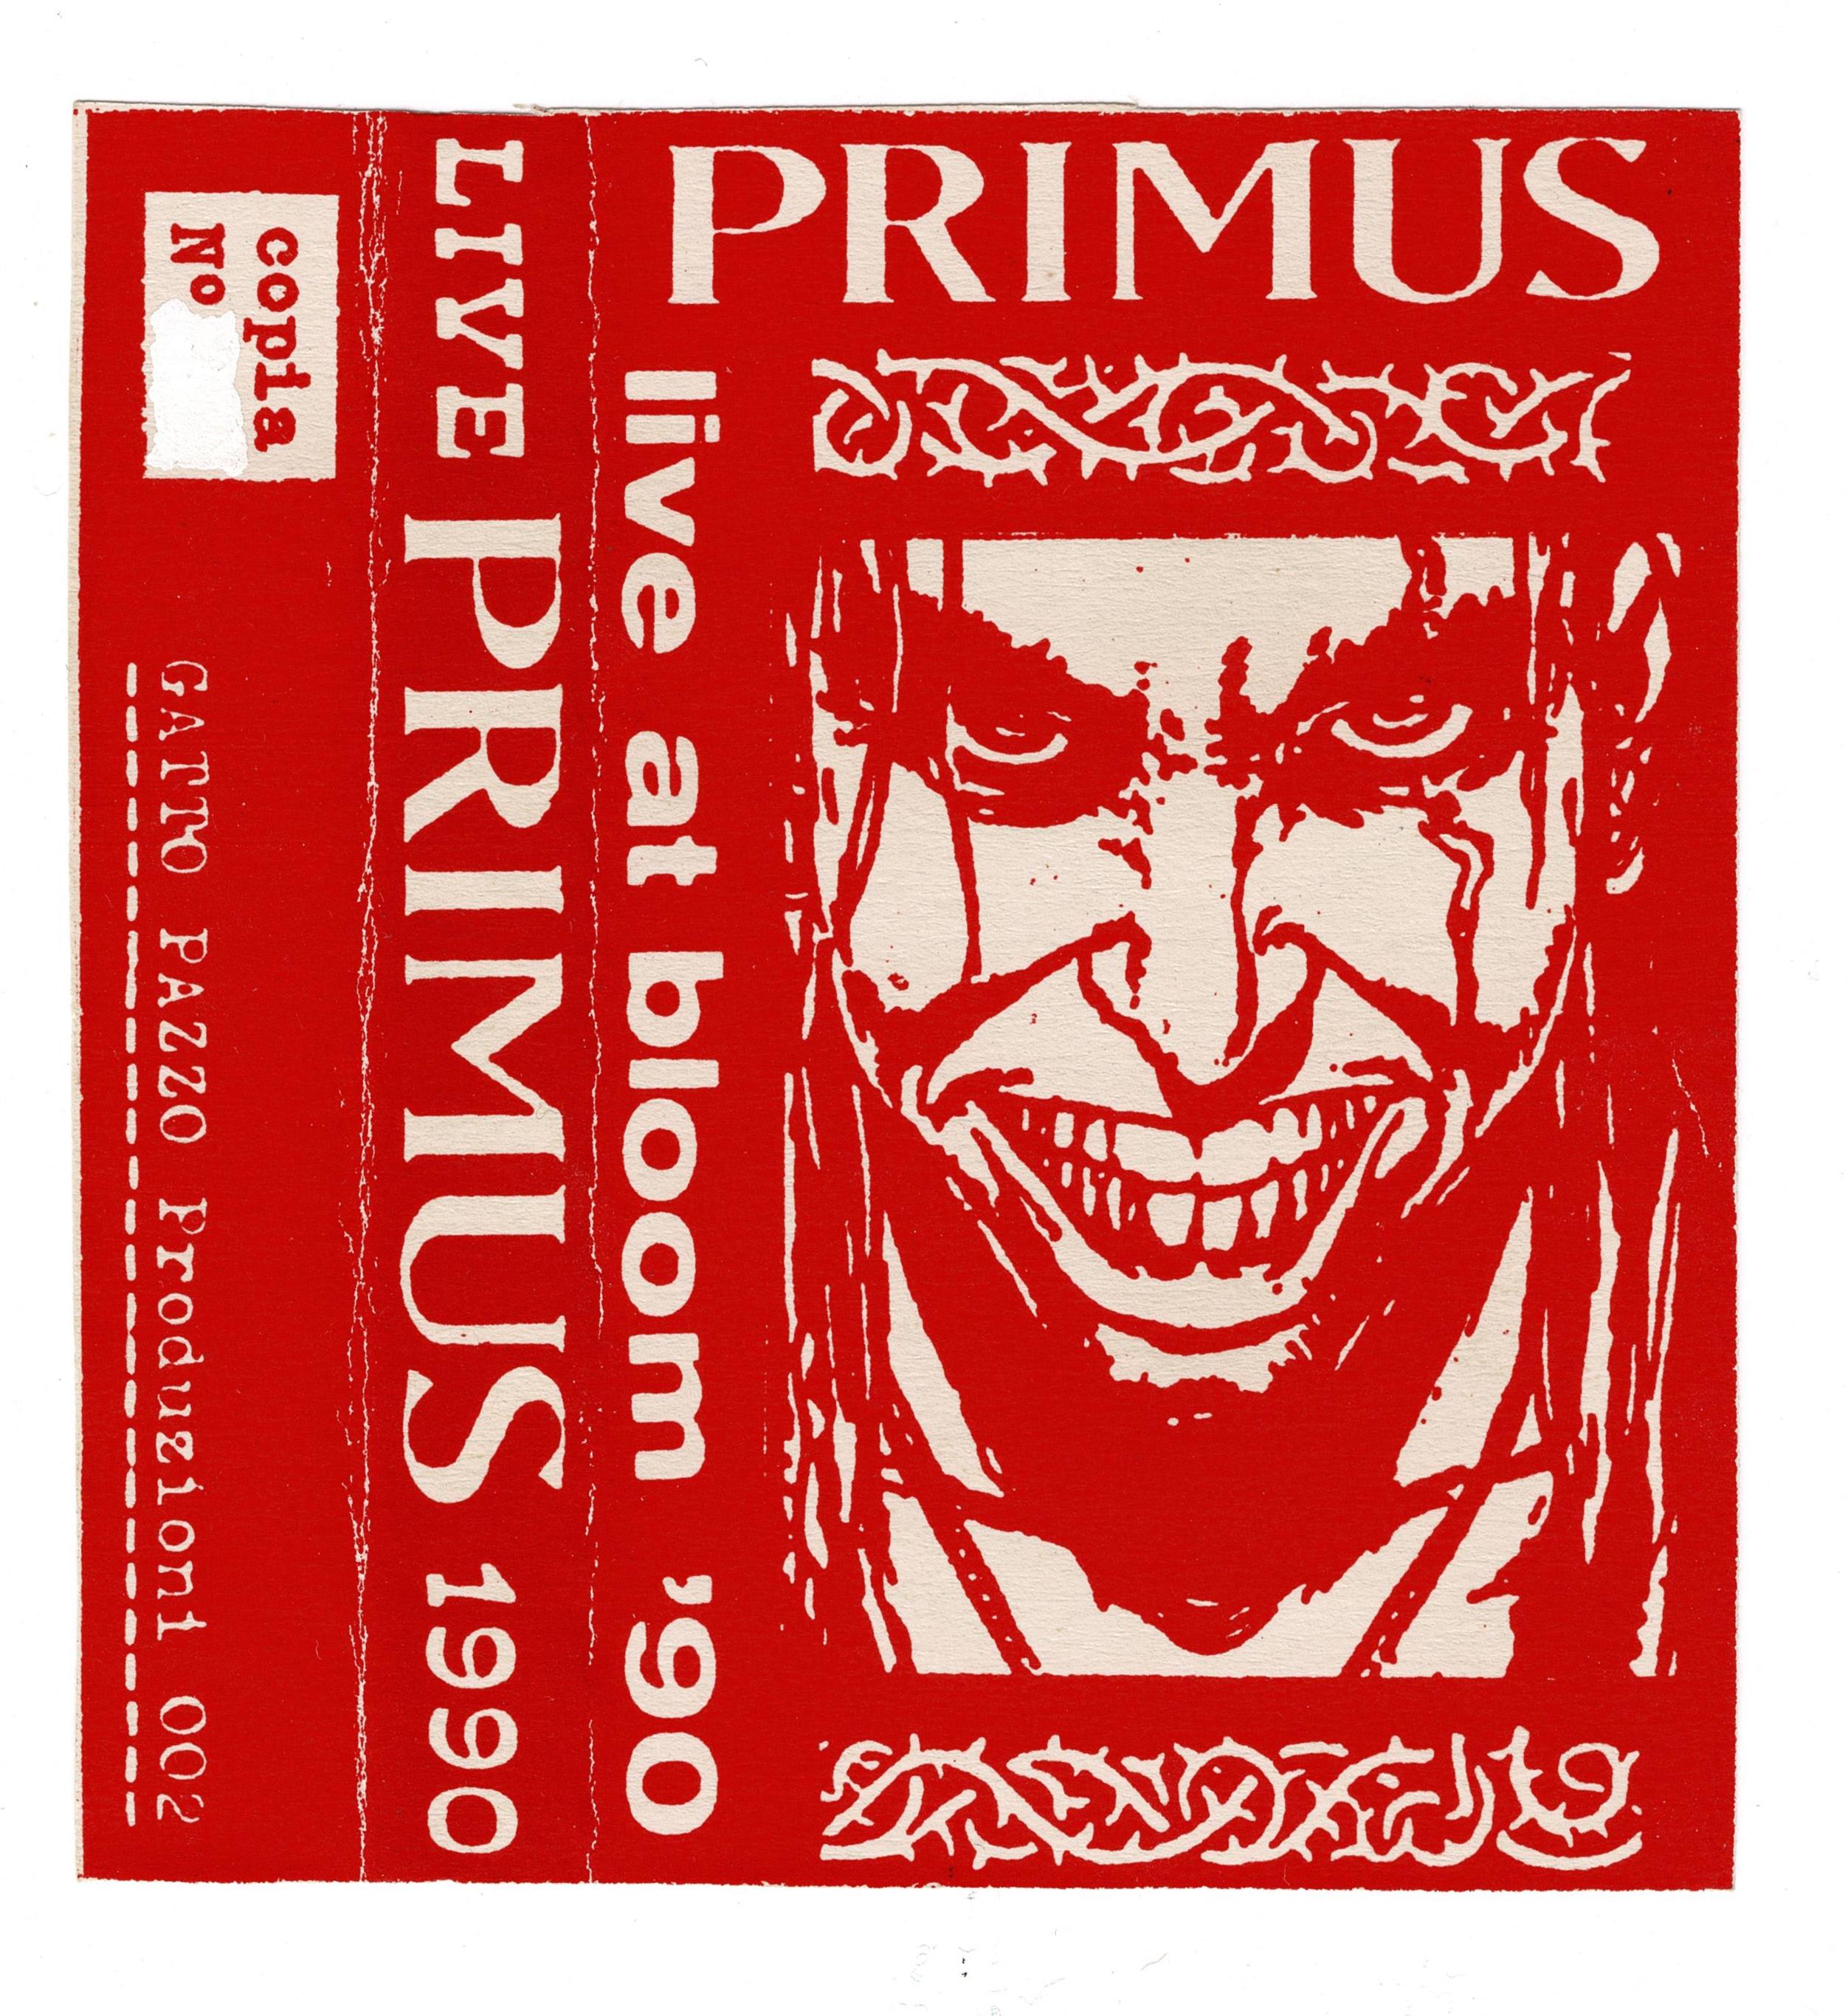 Primus1990-11-02BloomMezzagoItaly (1).jpg